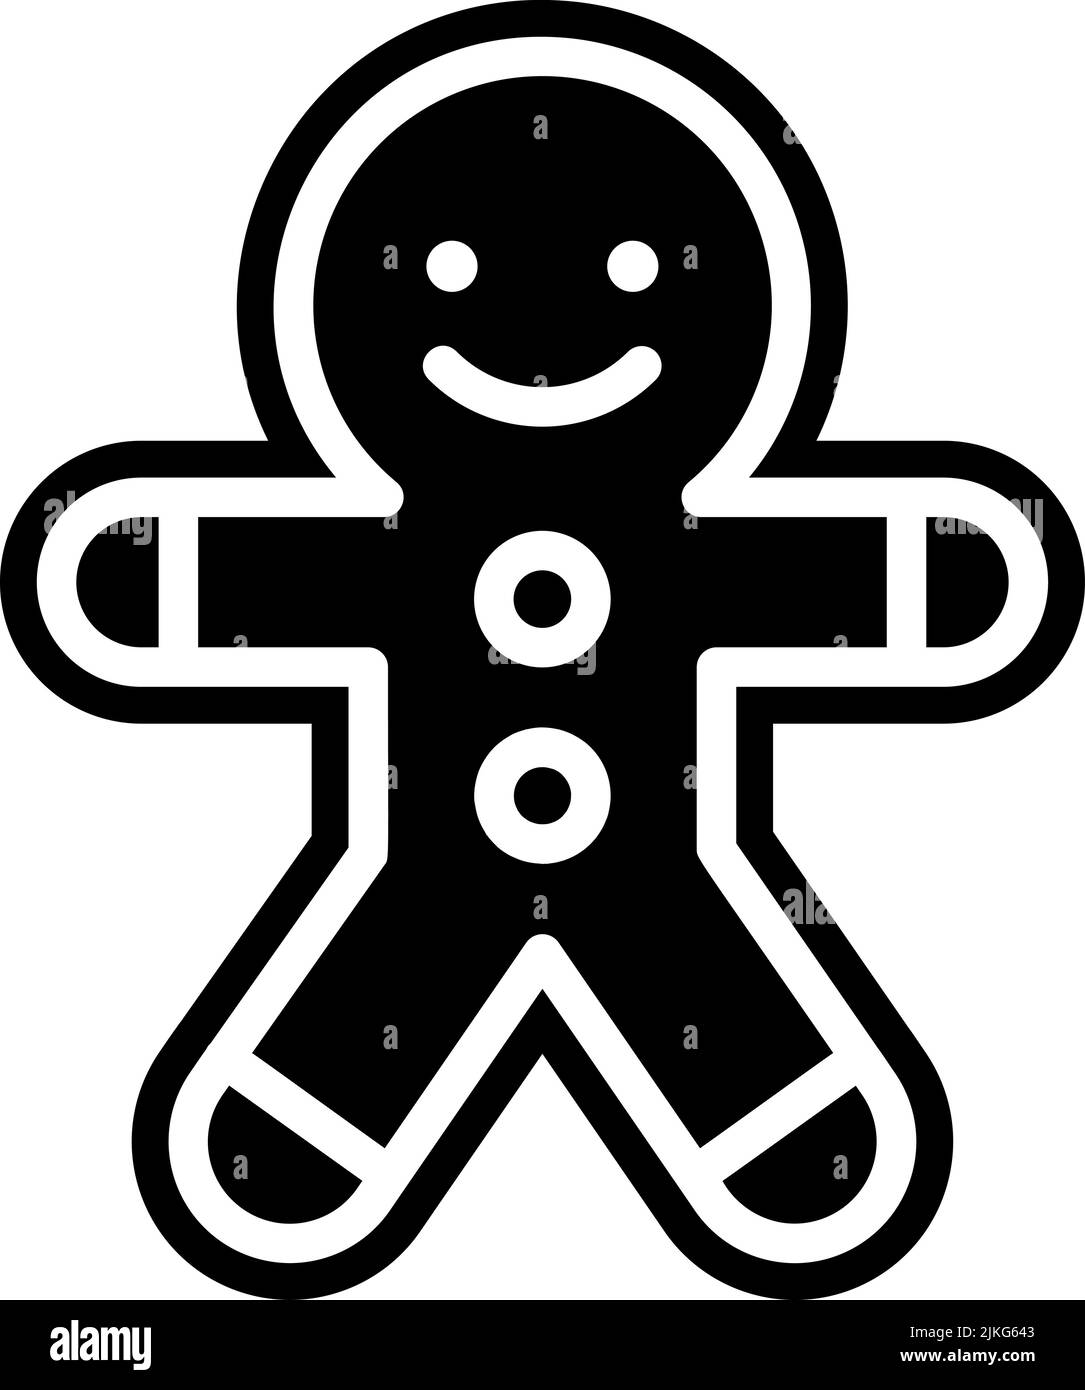 gingerbread man icon black vector illustration. Stock Vector